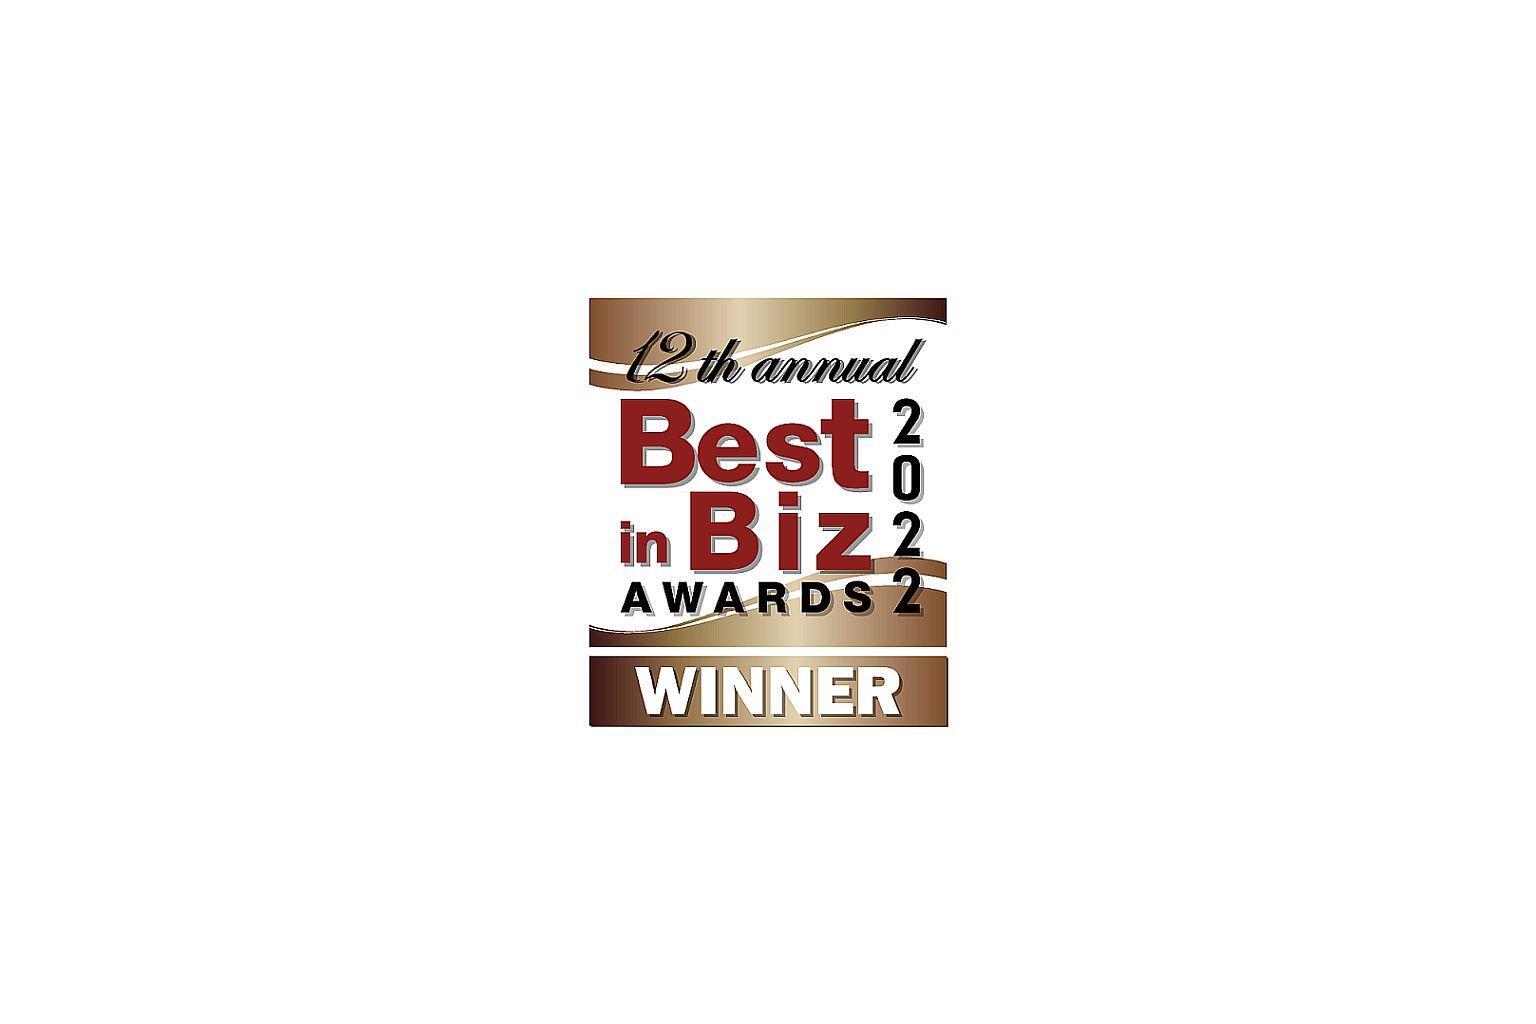 CT Corporation wins 2022 Bronze Best in Biz award